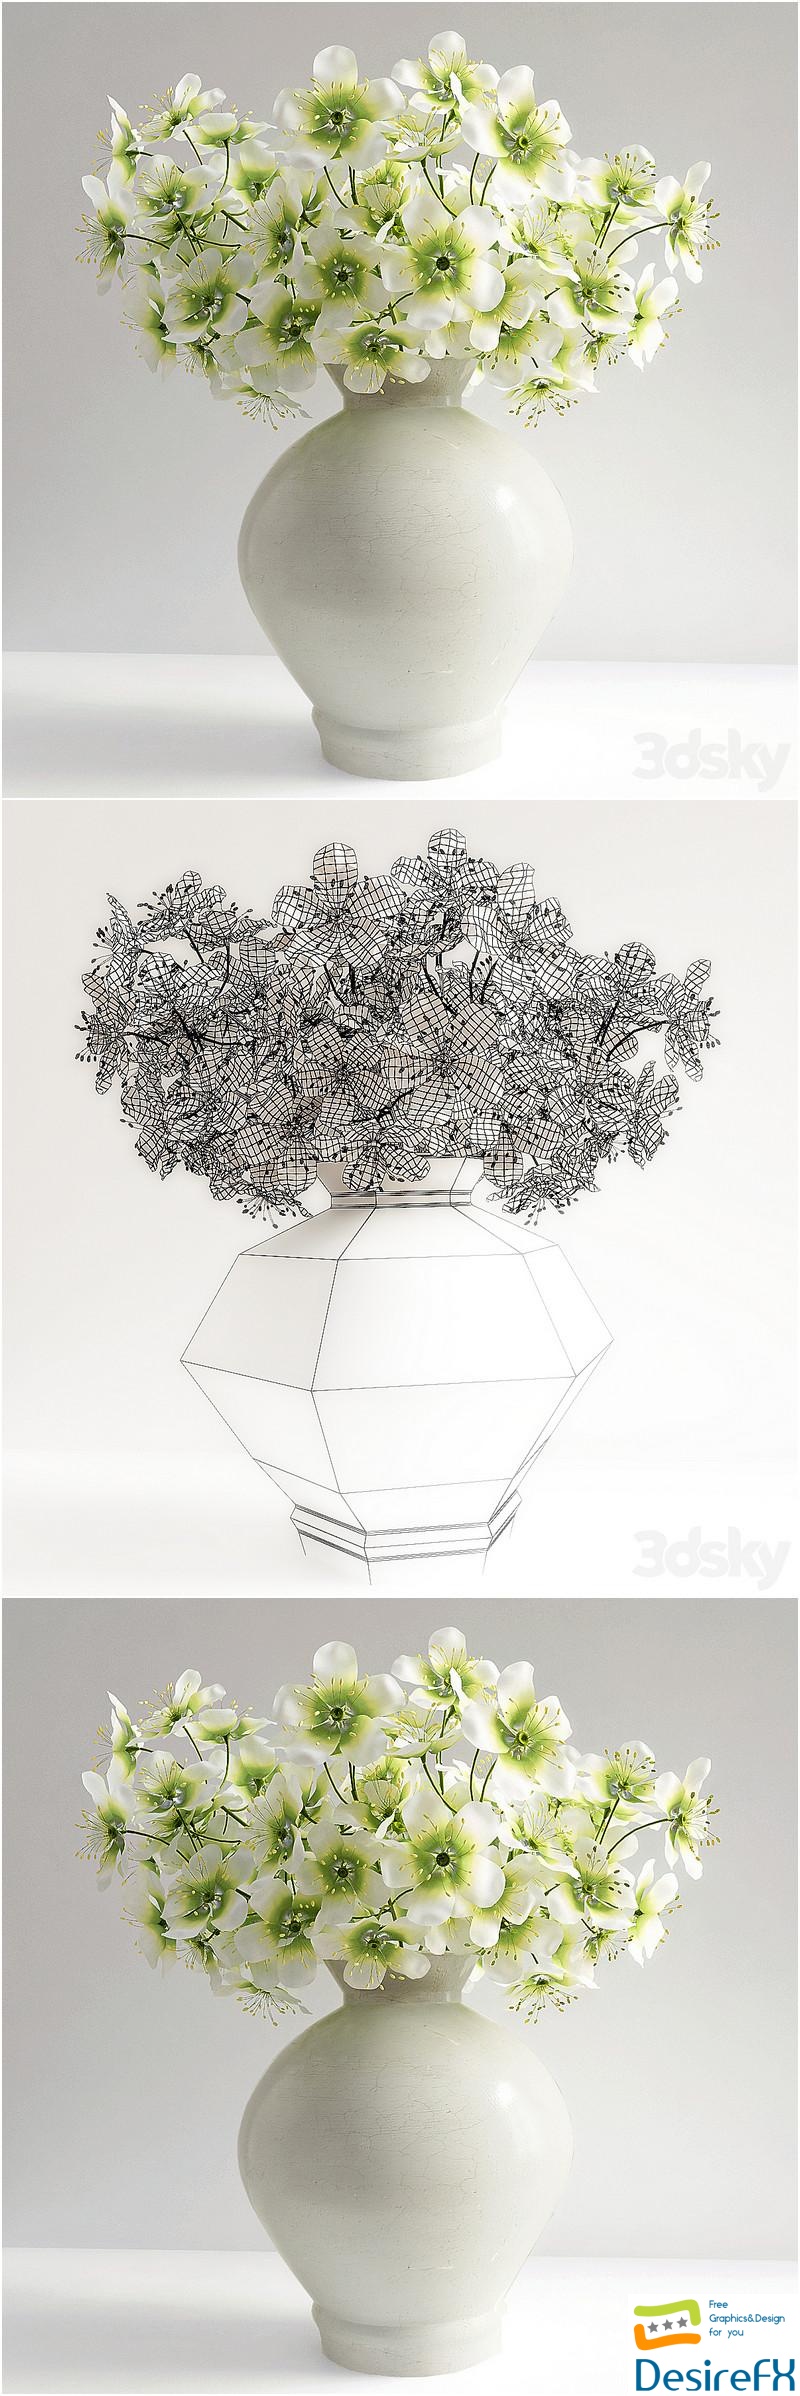 Flowers in a vase 003 3D Model